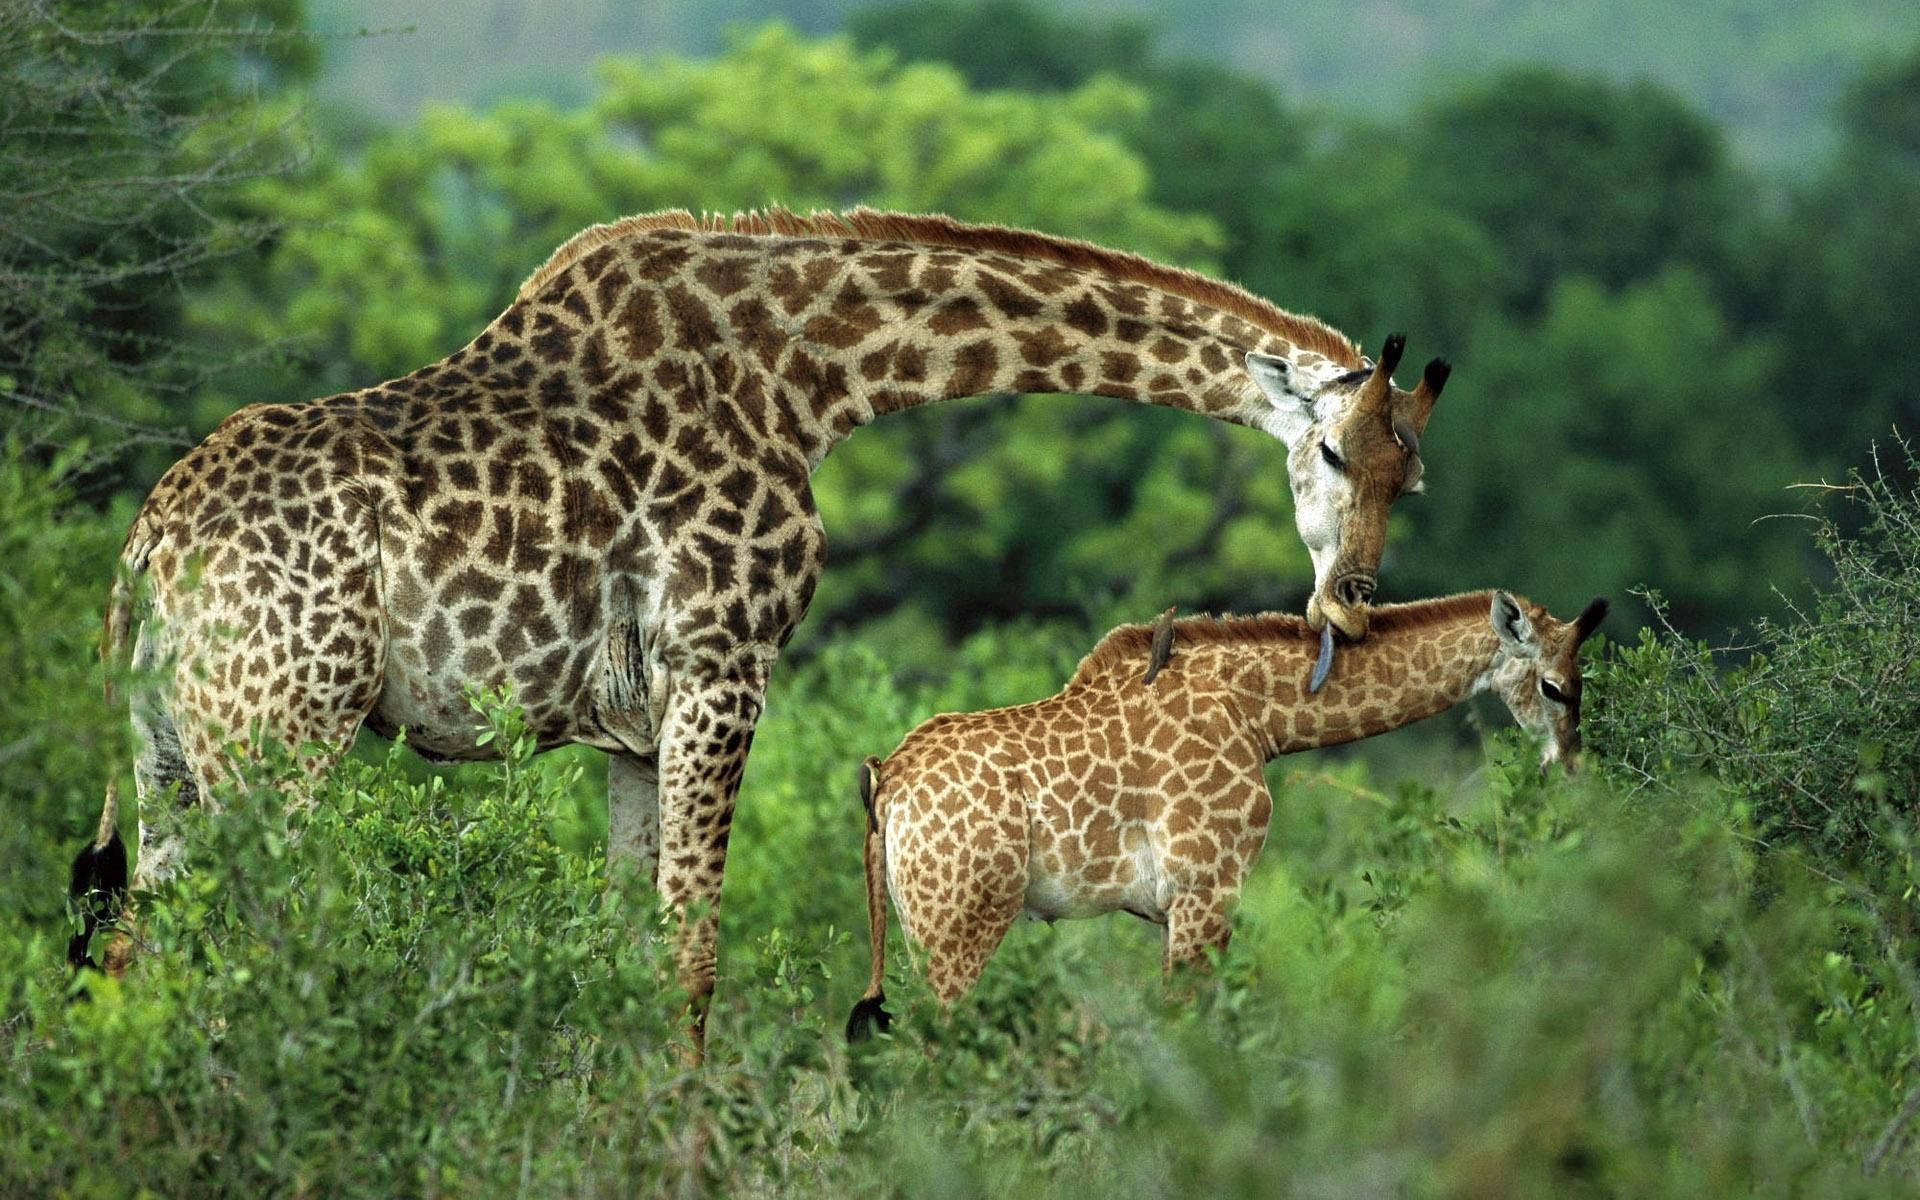 Mother Giraffe And Cub